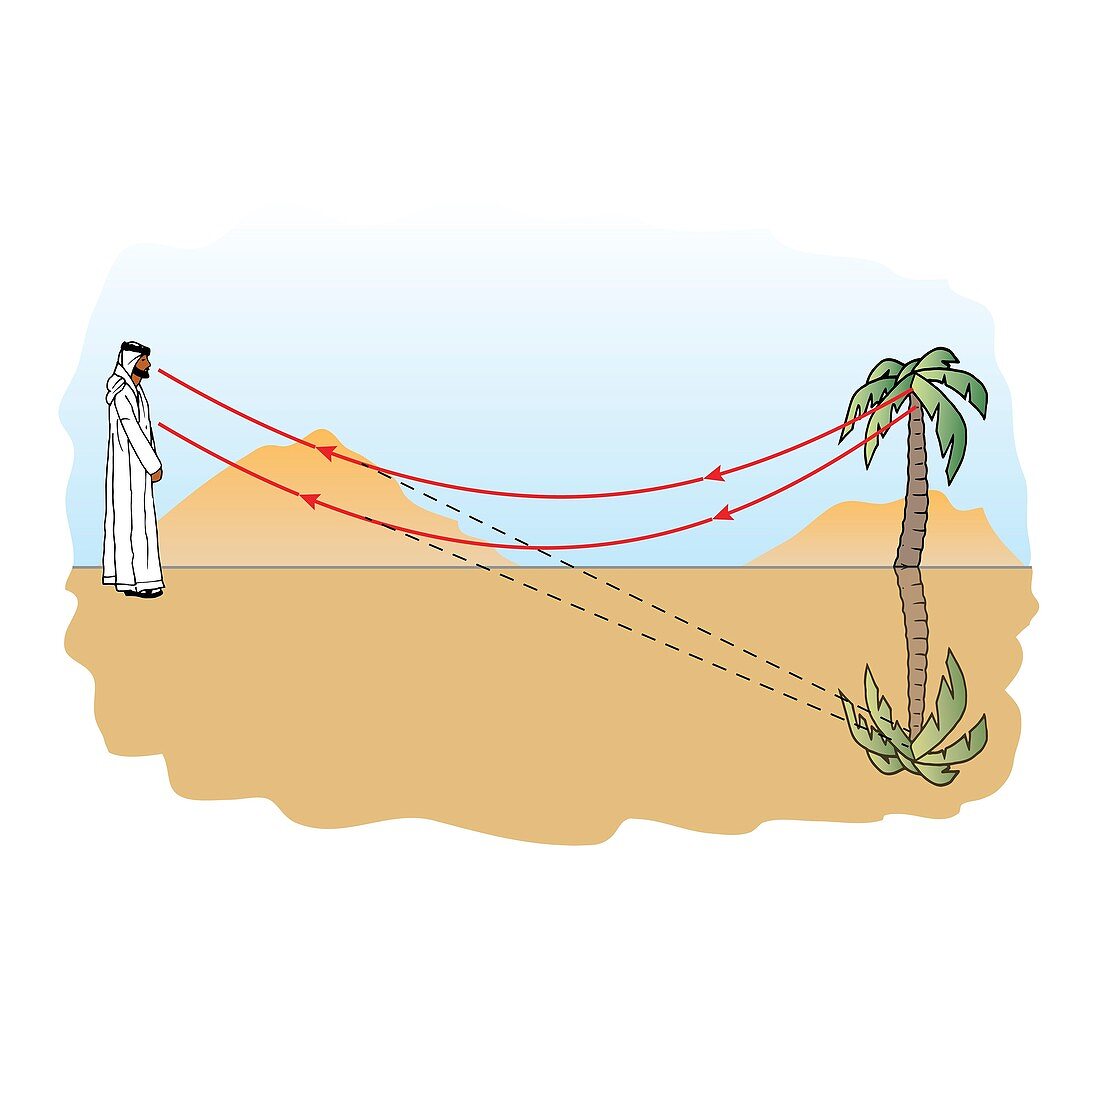 Desert mirage, illustration